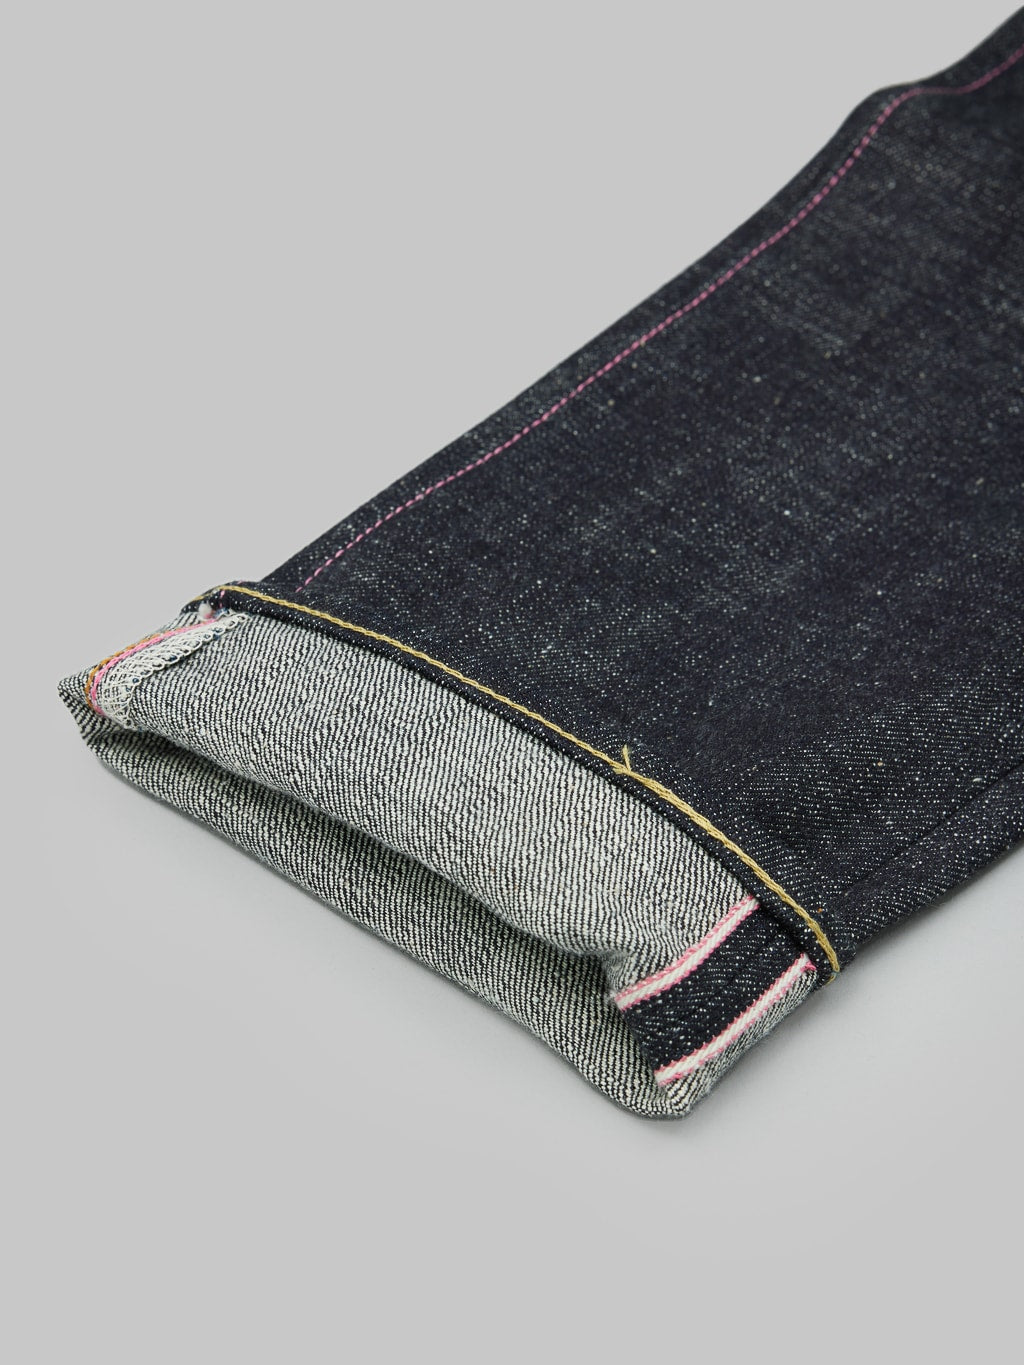 momotaro jeans 0605 82 16oz texture denim natural tapered pink selvedge